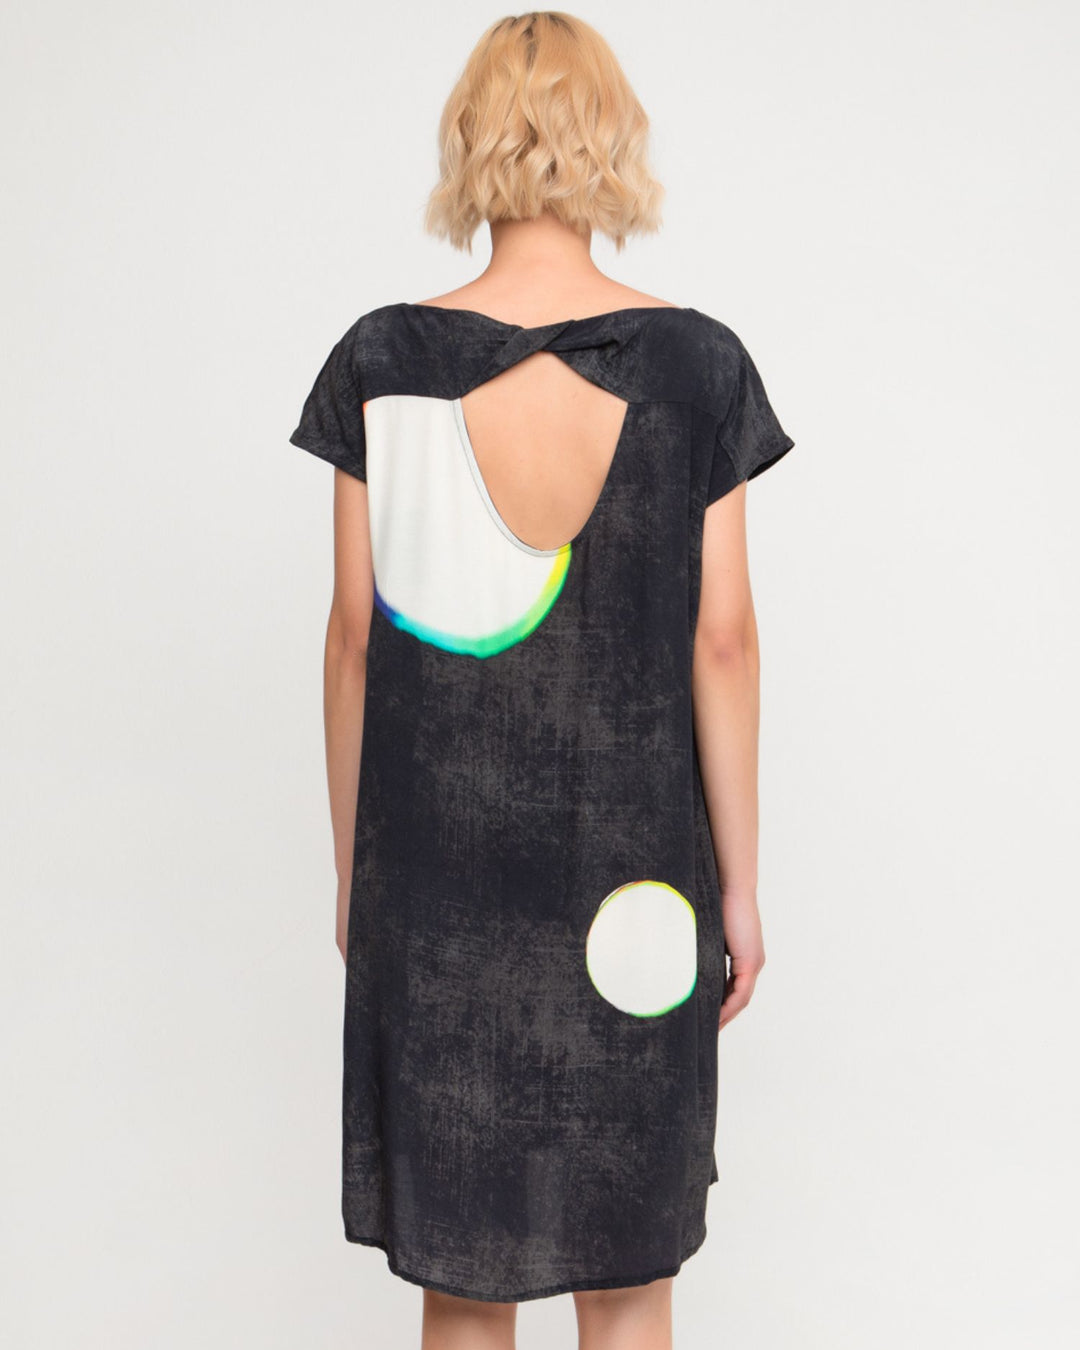 Ozai N Ku Orbits Open-Back Shift Dress, Charcoal multi